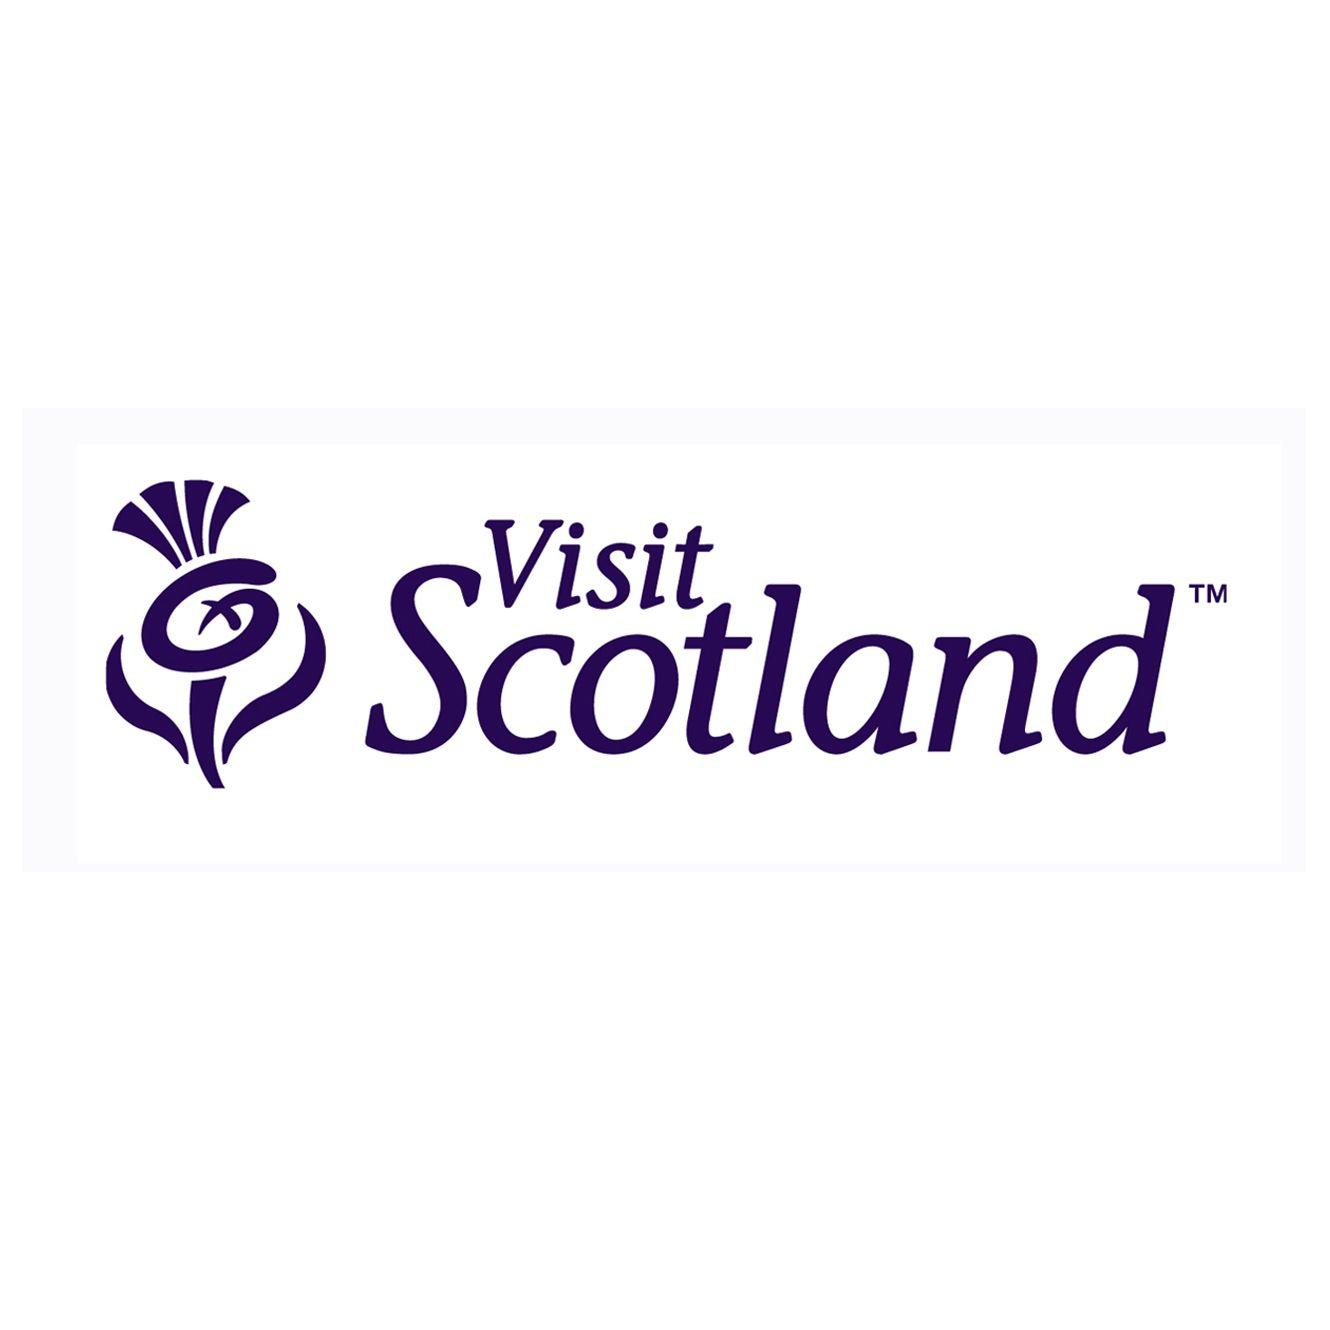 Scotland Logo - Visit Scotland